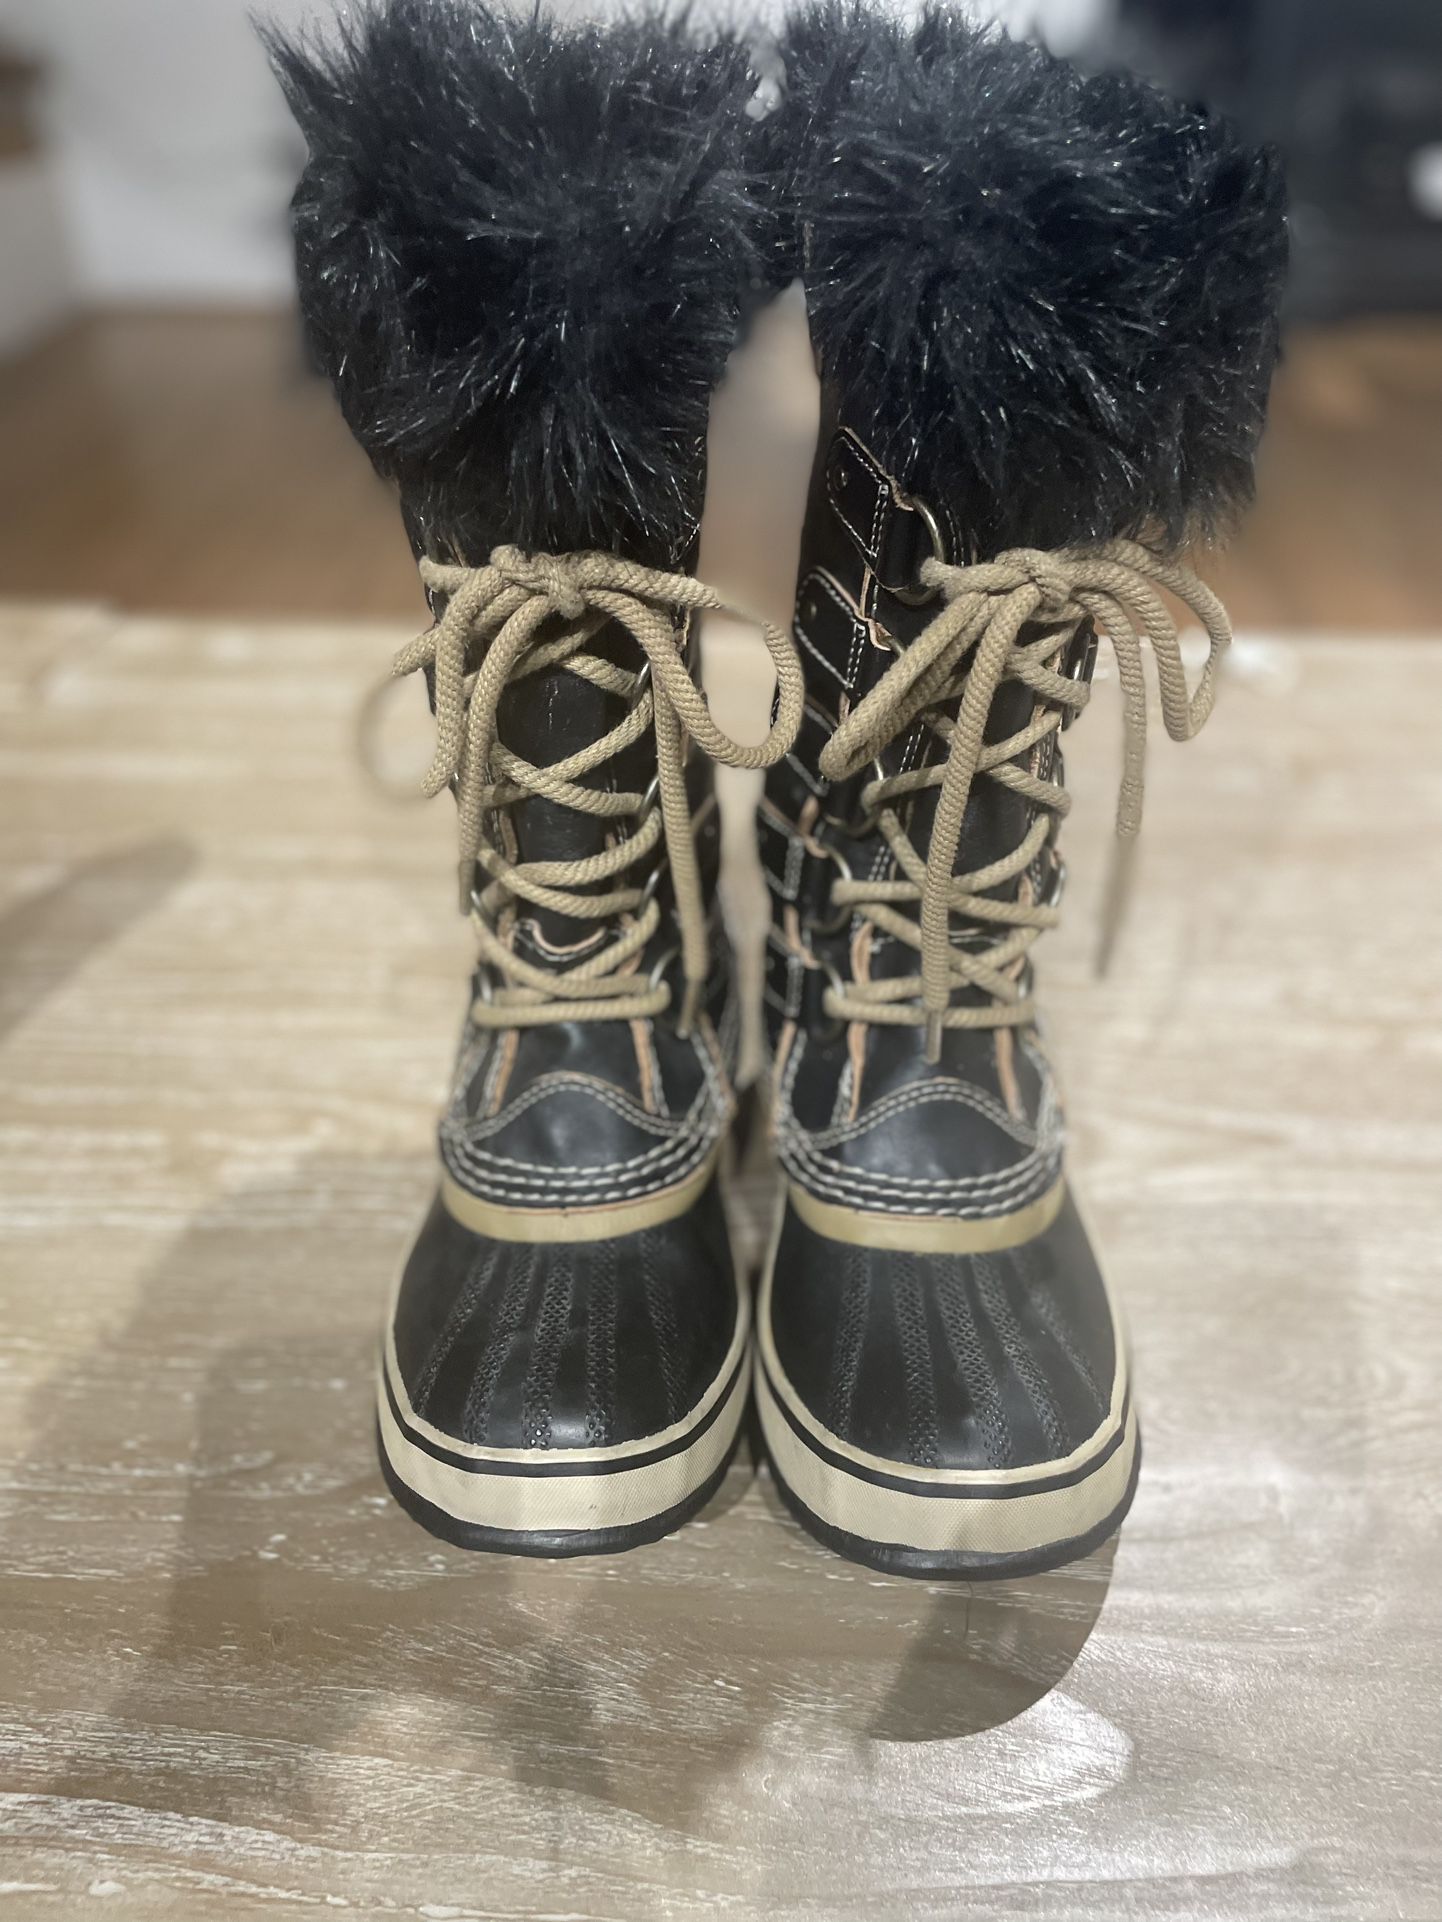 Sorel Joan of Arctic Boots Size 7